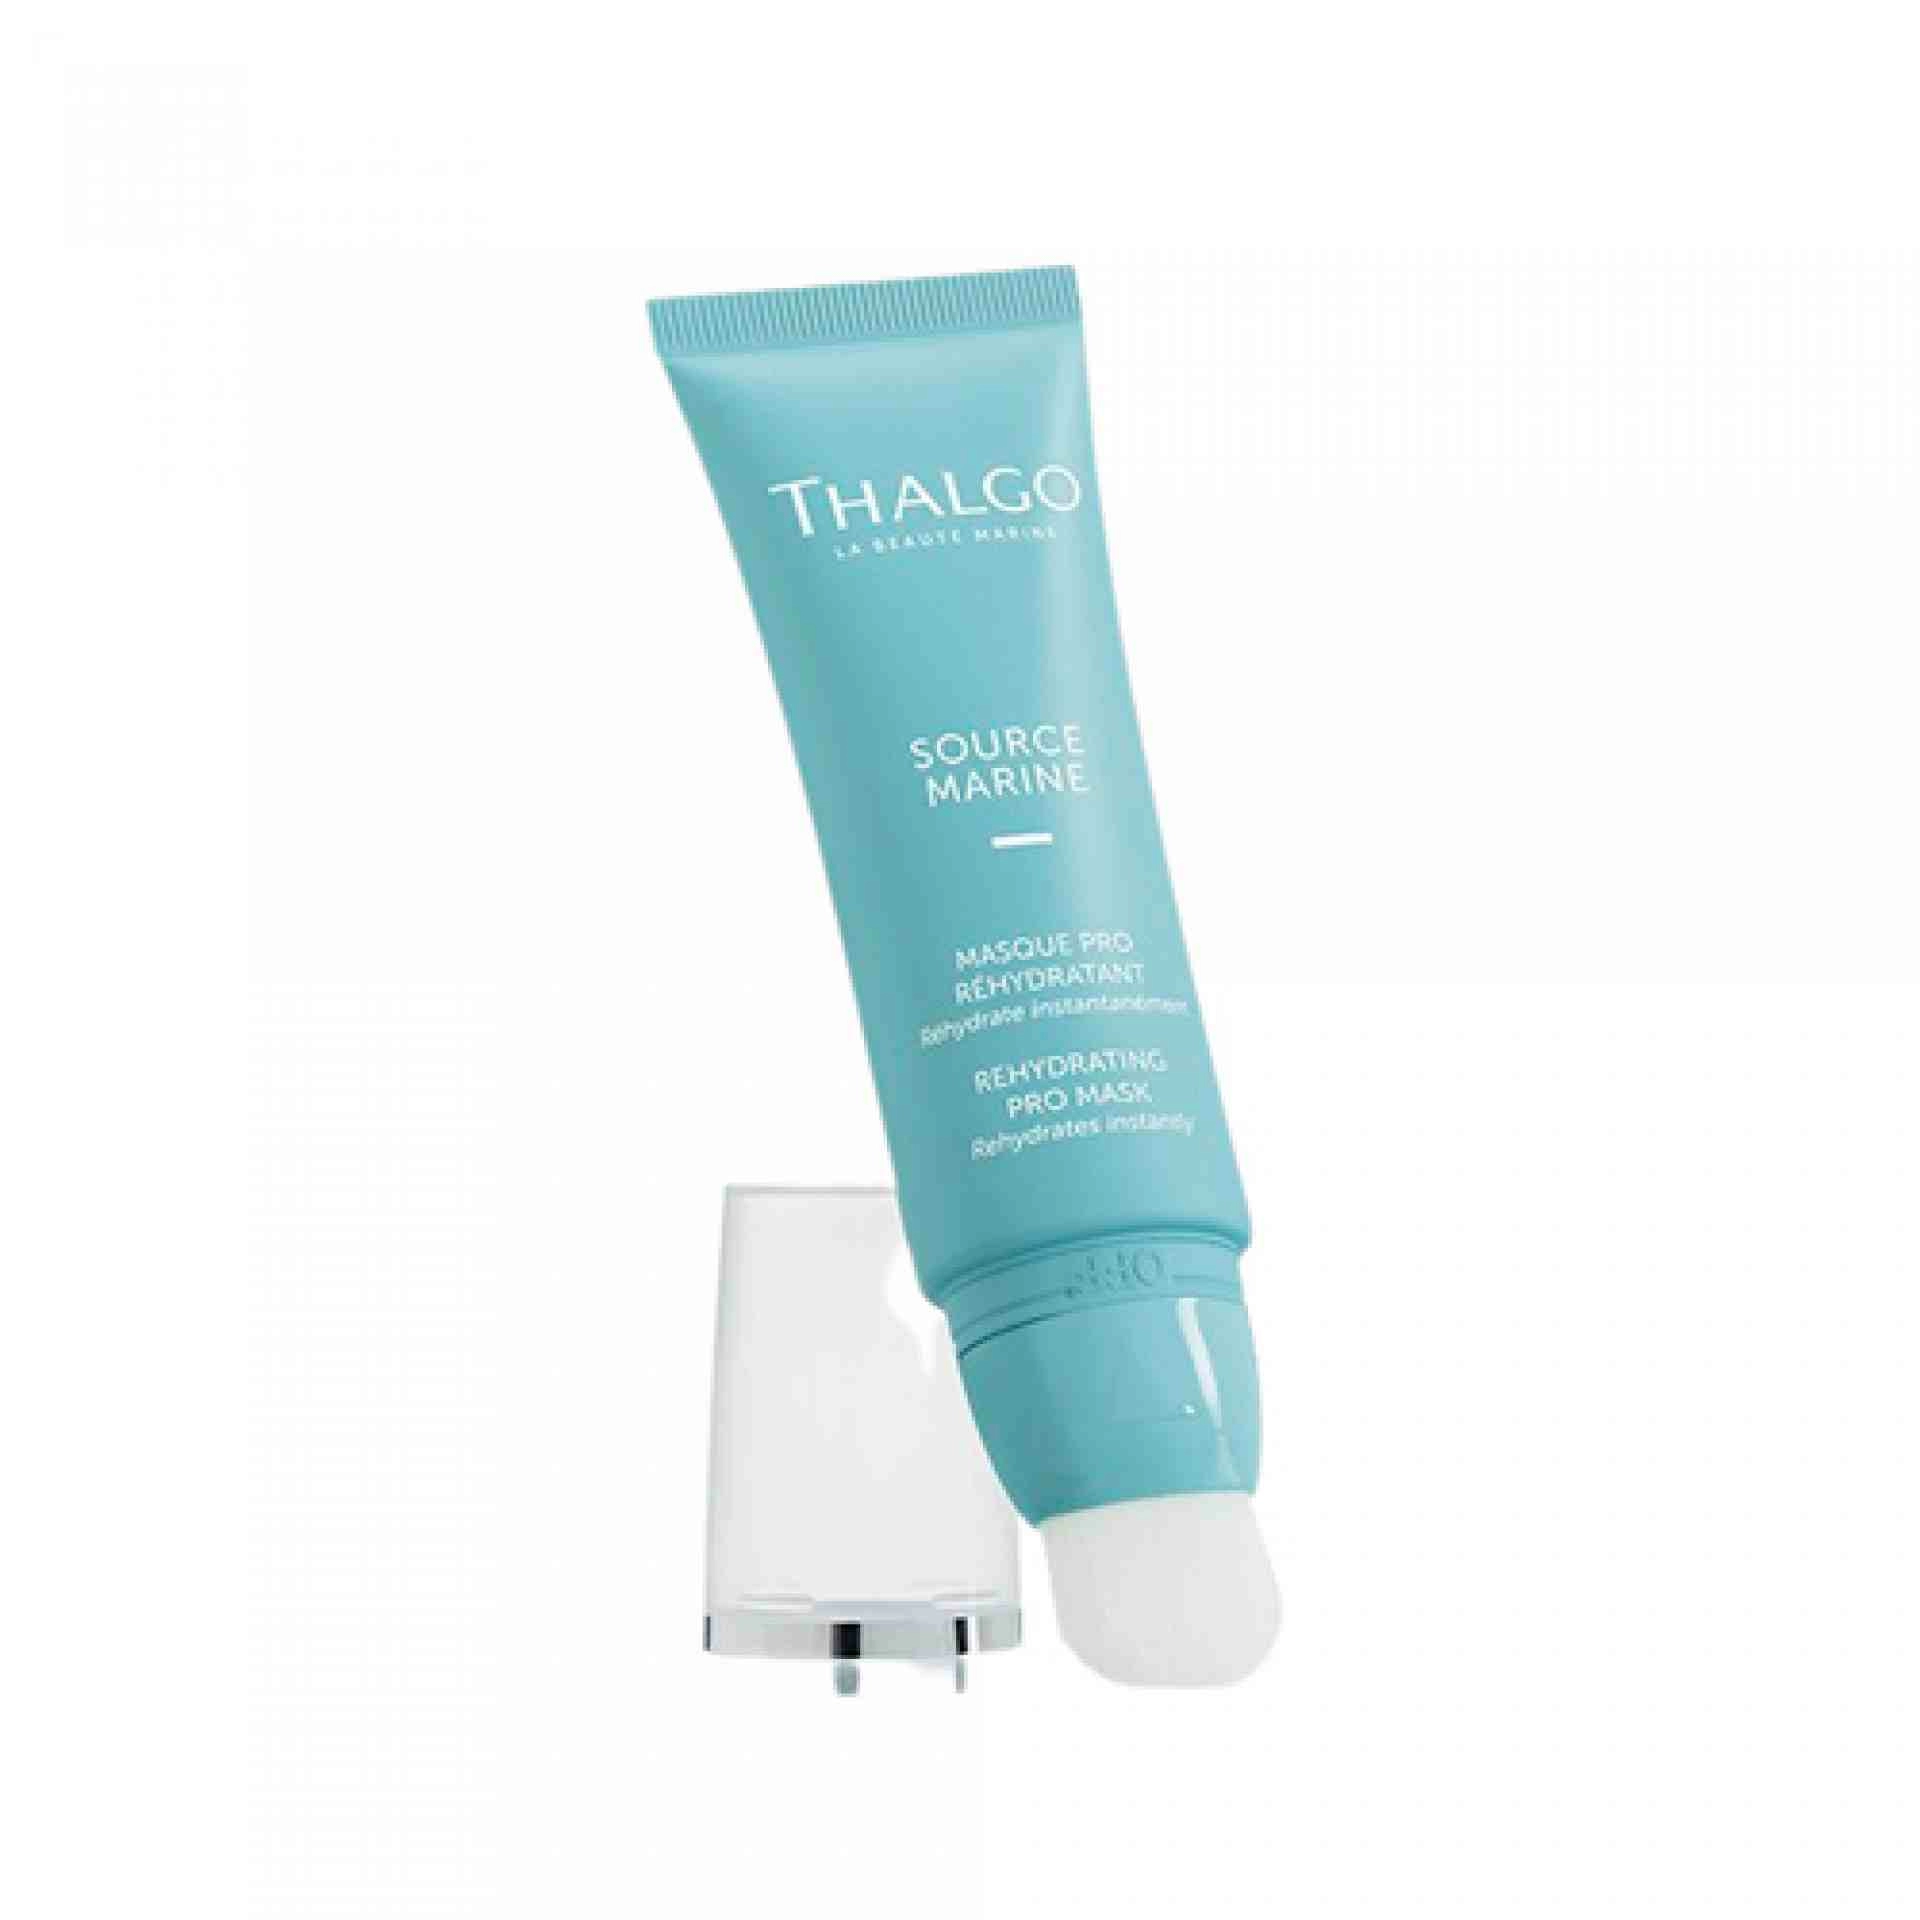 Masque Pro Réhydratant | Mascarilla Hidratante 50ml - Source Marine - Thalgo ®